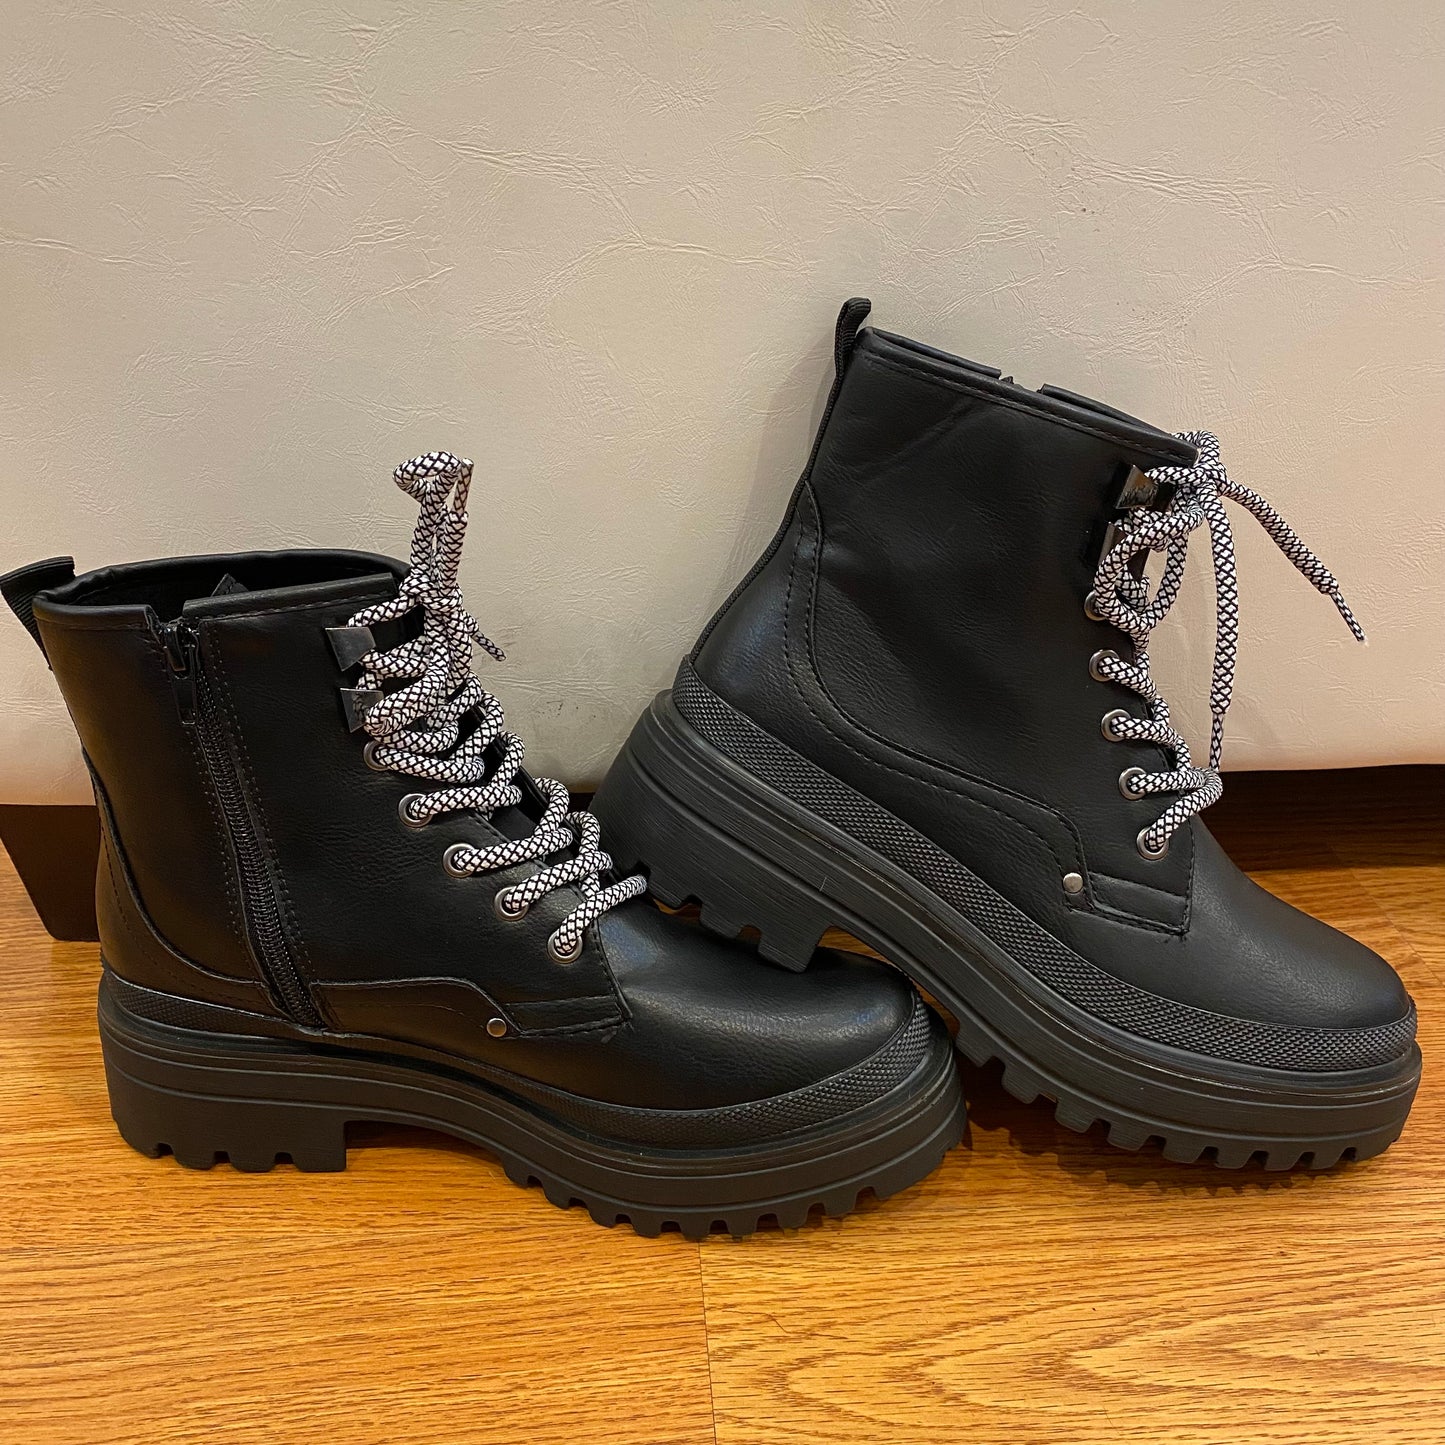 Ymelda Combat Boot - Black - Size 7.5